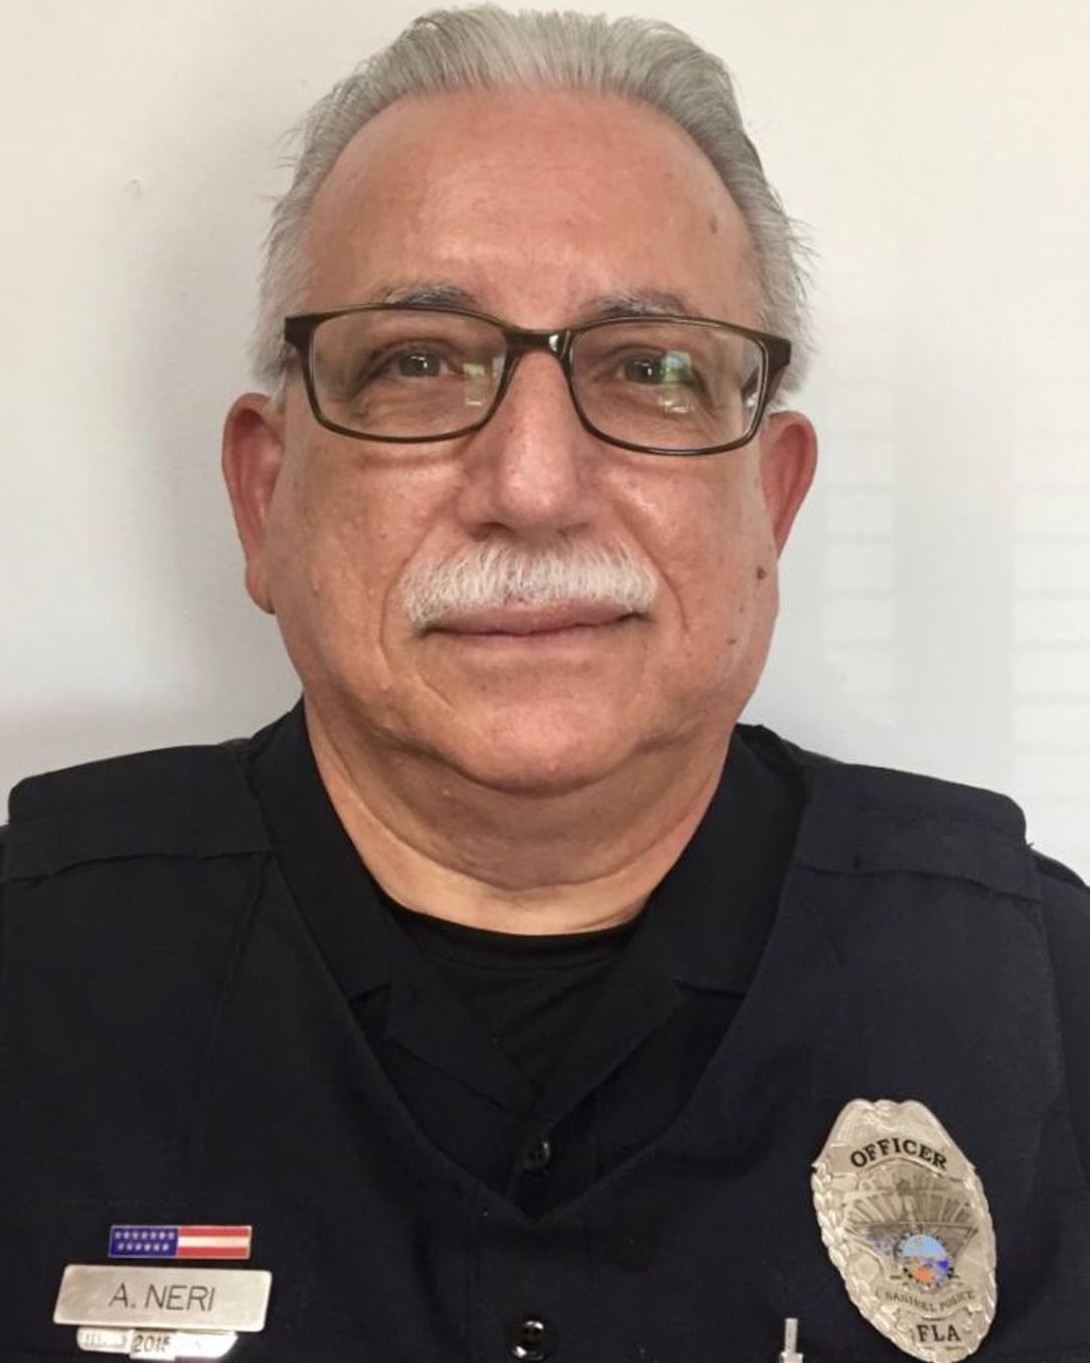 Police Officer Anthony Neri | Sanibel Police Department, Florida